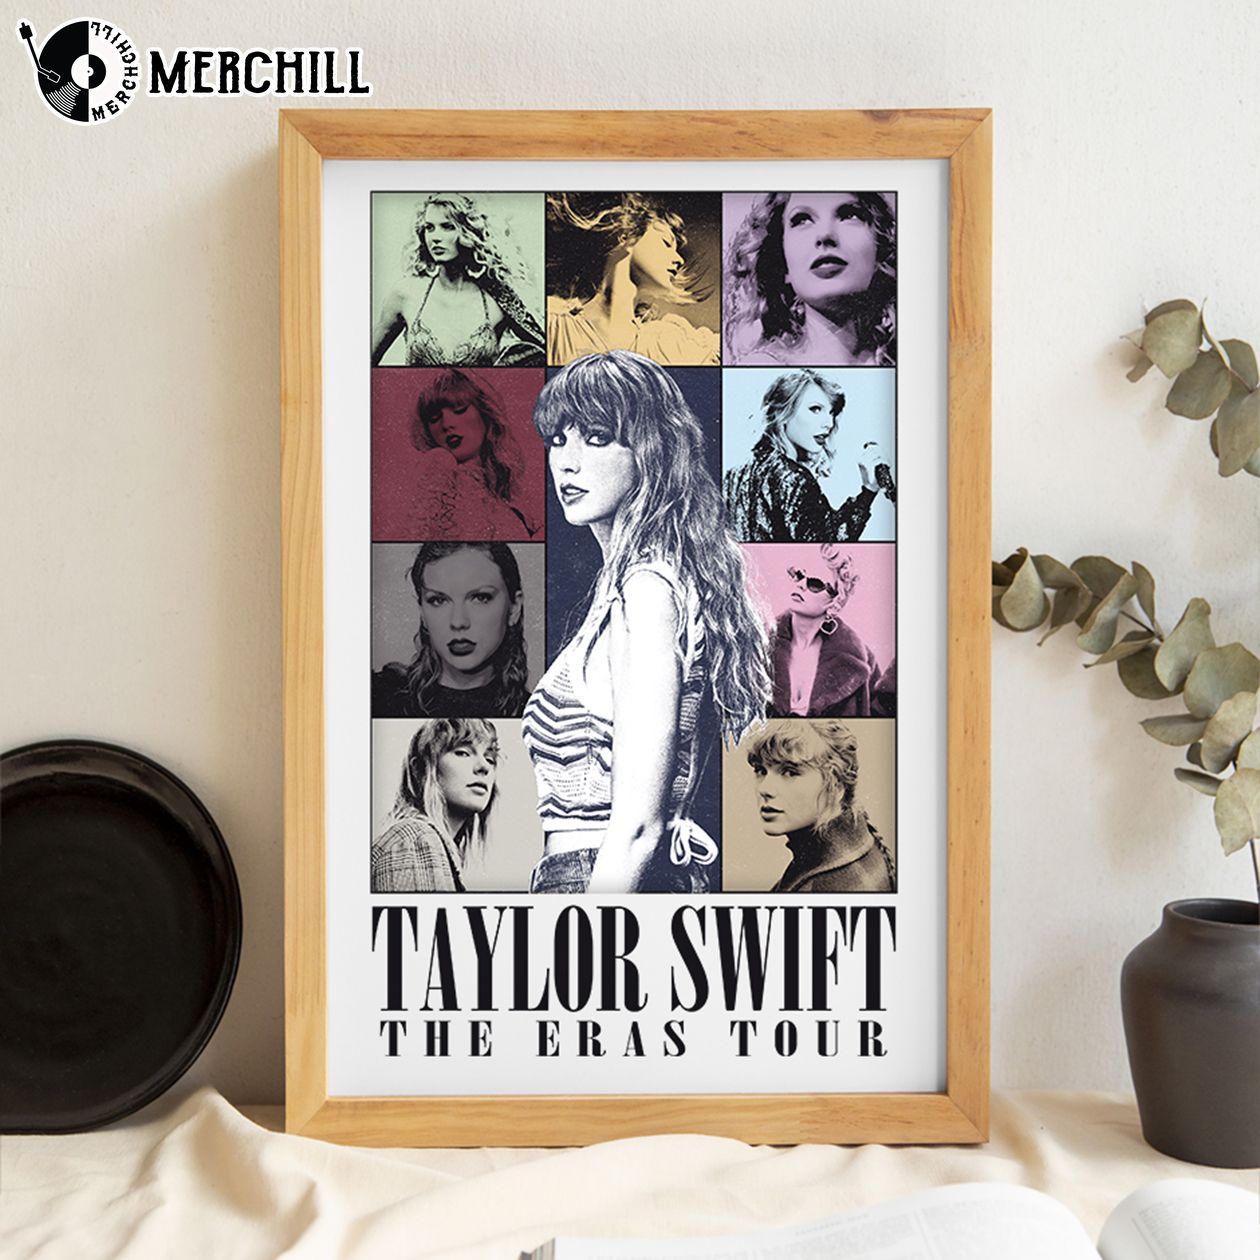 Taylor swift eras tour complete poster set 4 pack